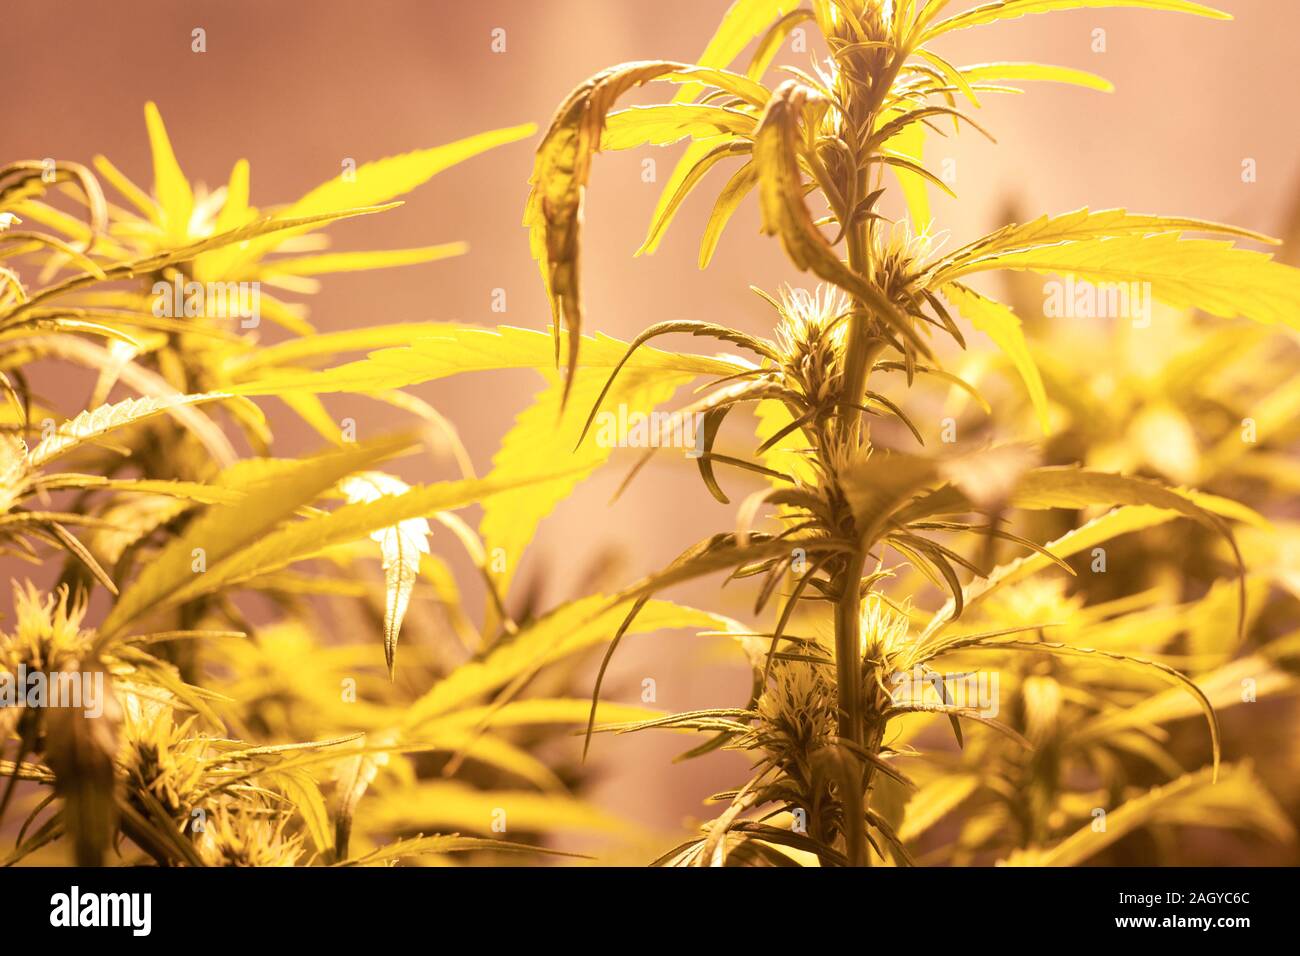 cultivation medicinal green cannabis buds. grow indoor marijuana under a sodium discharge lamp warm spektr. Stock Photo